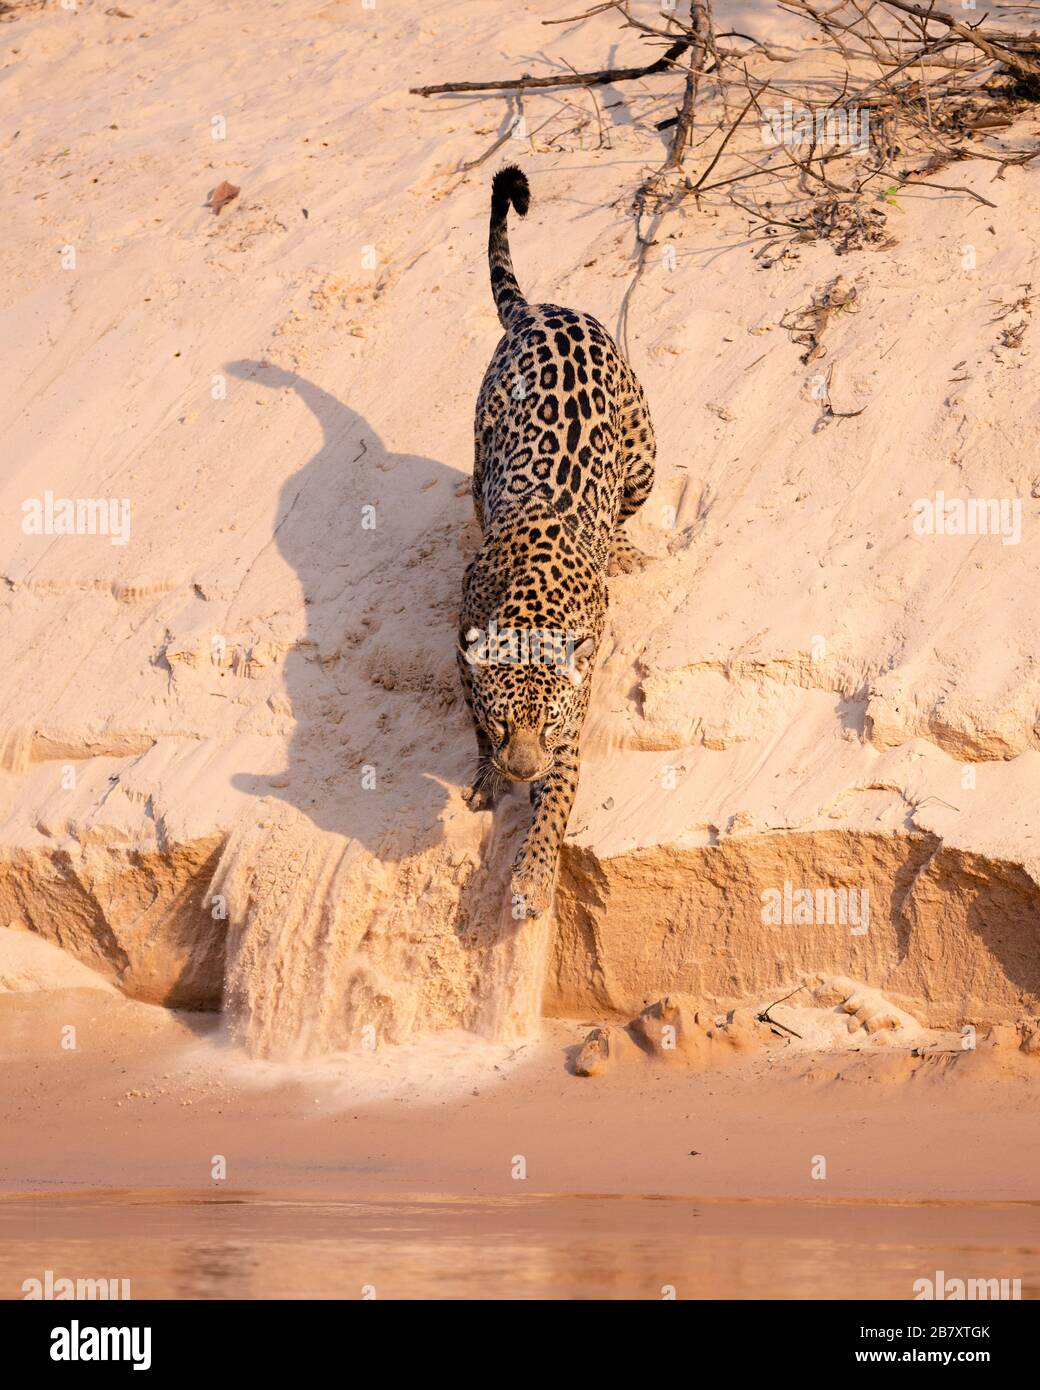 A Jaguar walks on a sand beach in North Pantanal, Brazil Stock Photo